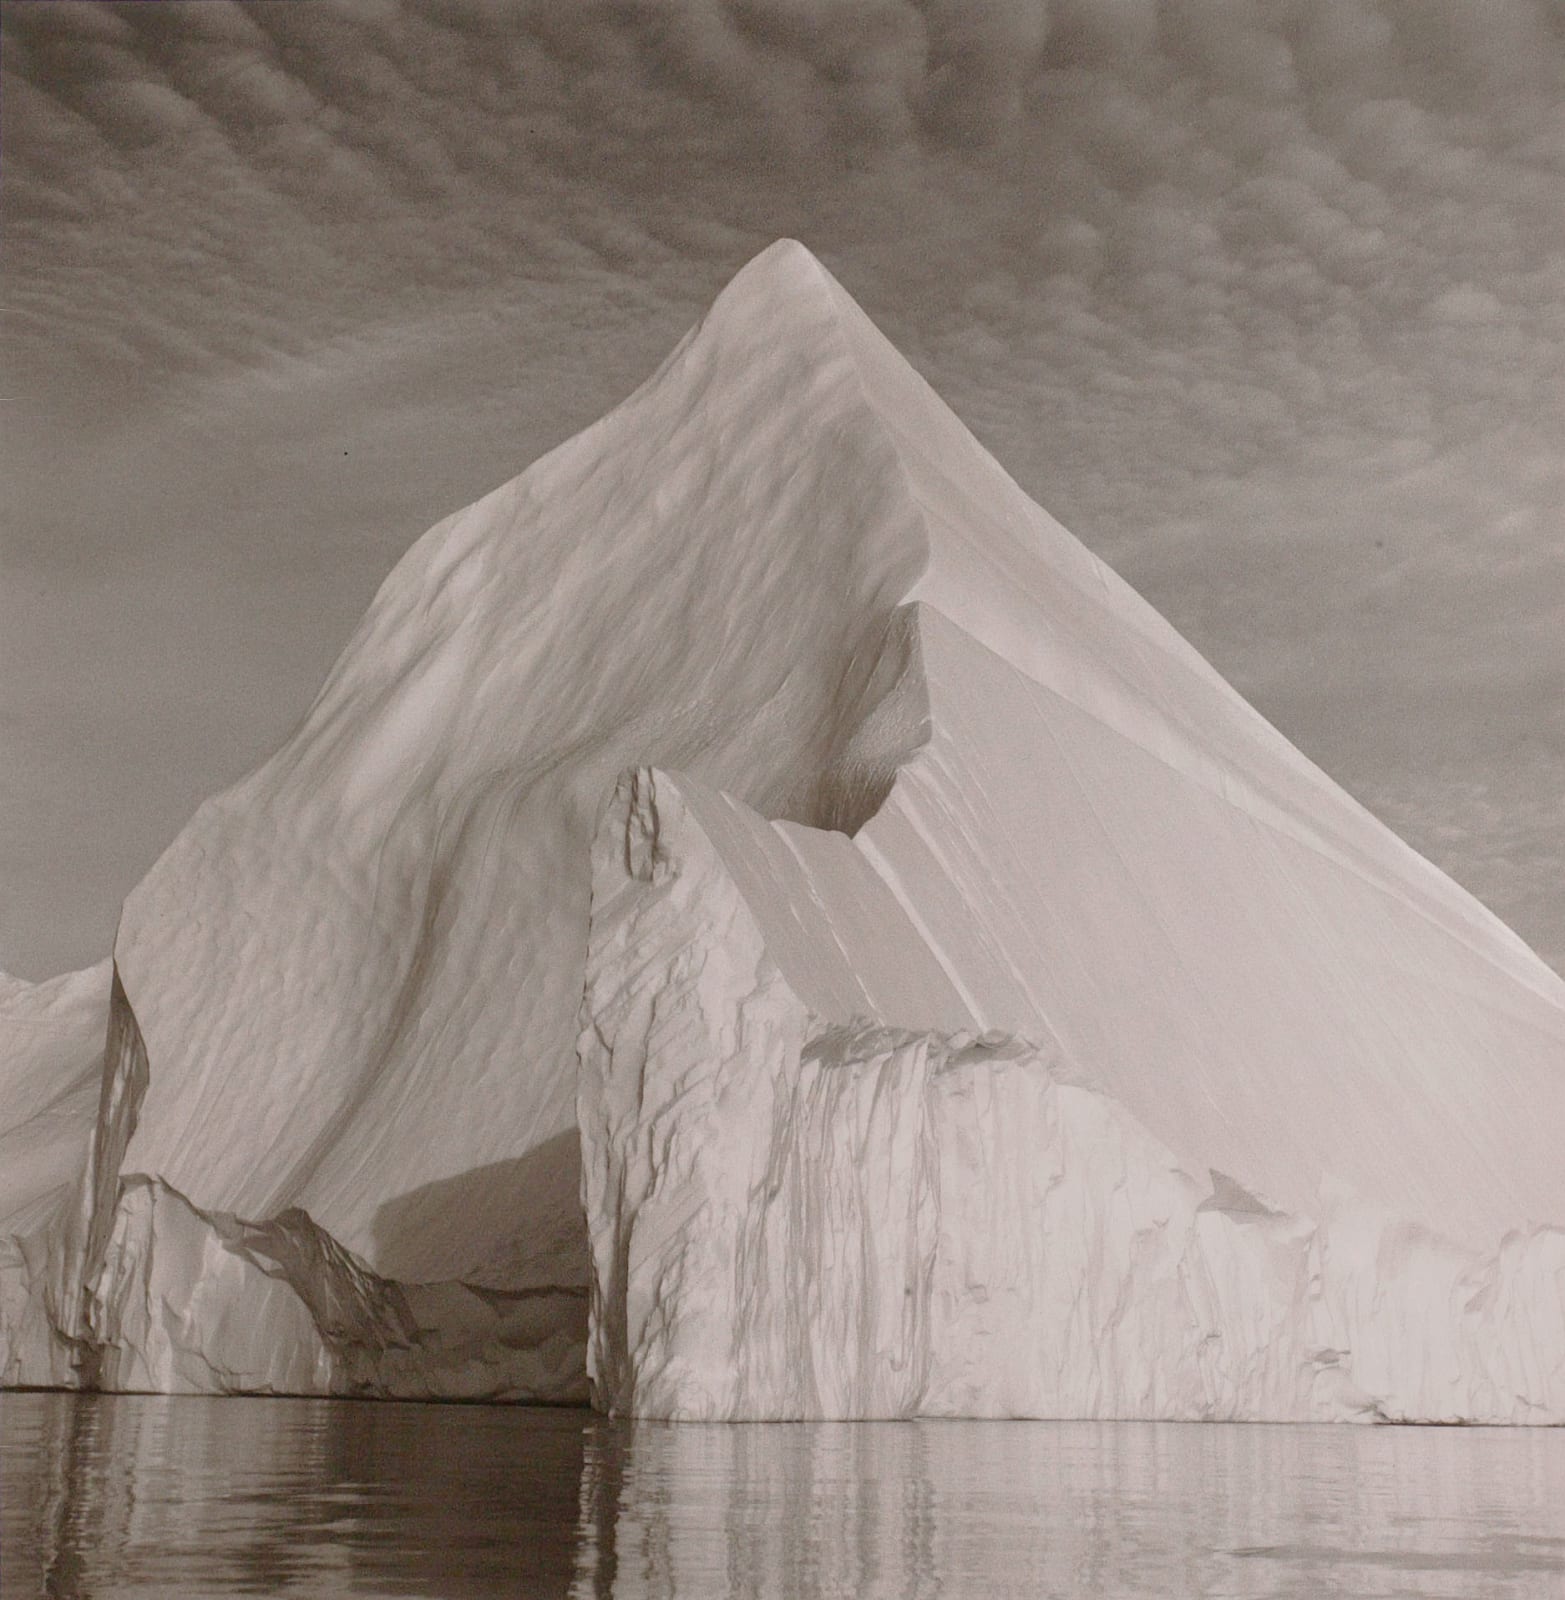 Lynn Davis photograph of an iceberg from Disko Bay, Greeland in the shape of a pyramid 